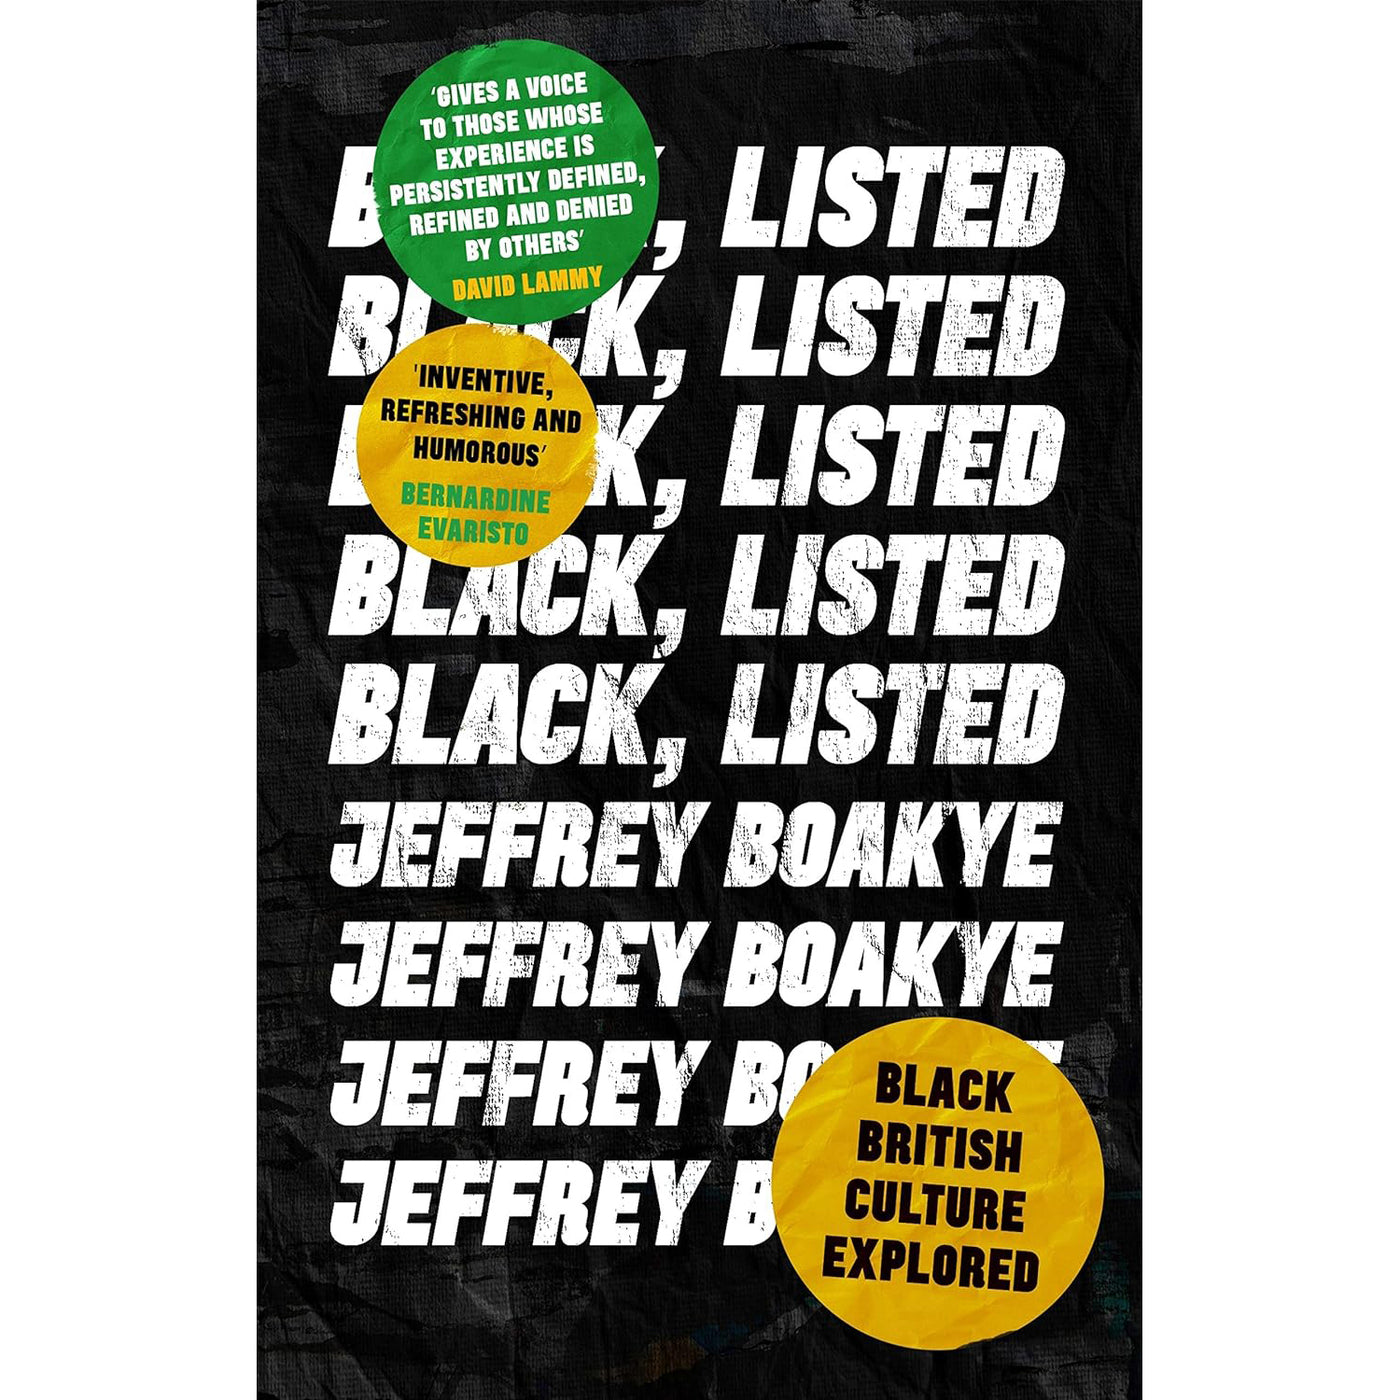 Black, Listed: Black British Culture Explored by Jeffrey Boakye